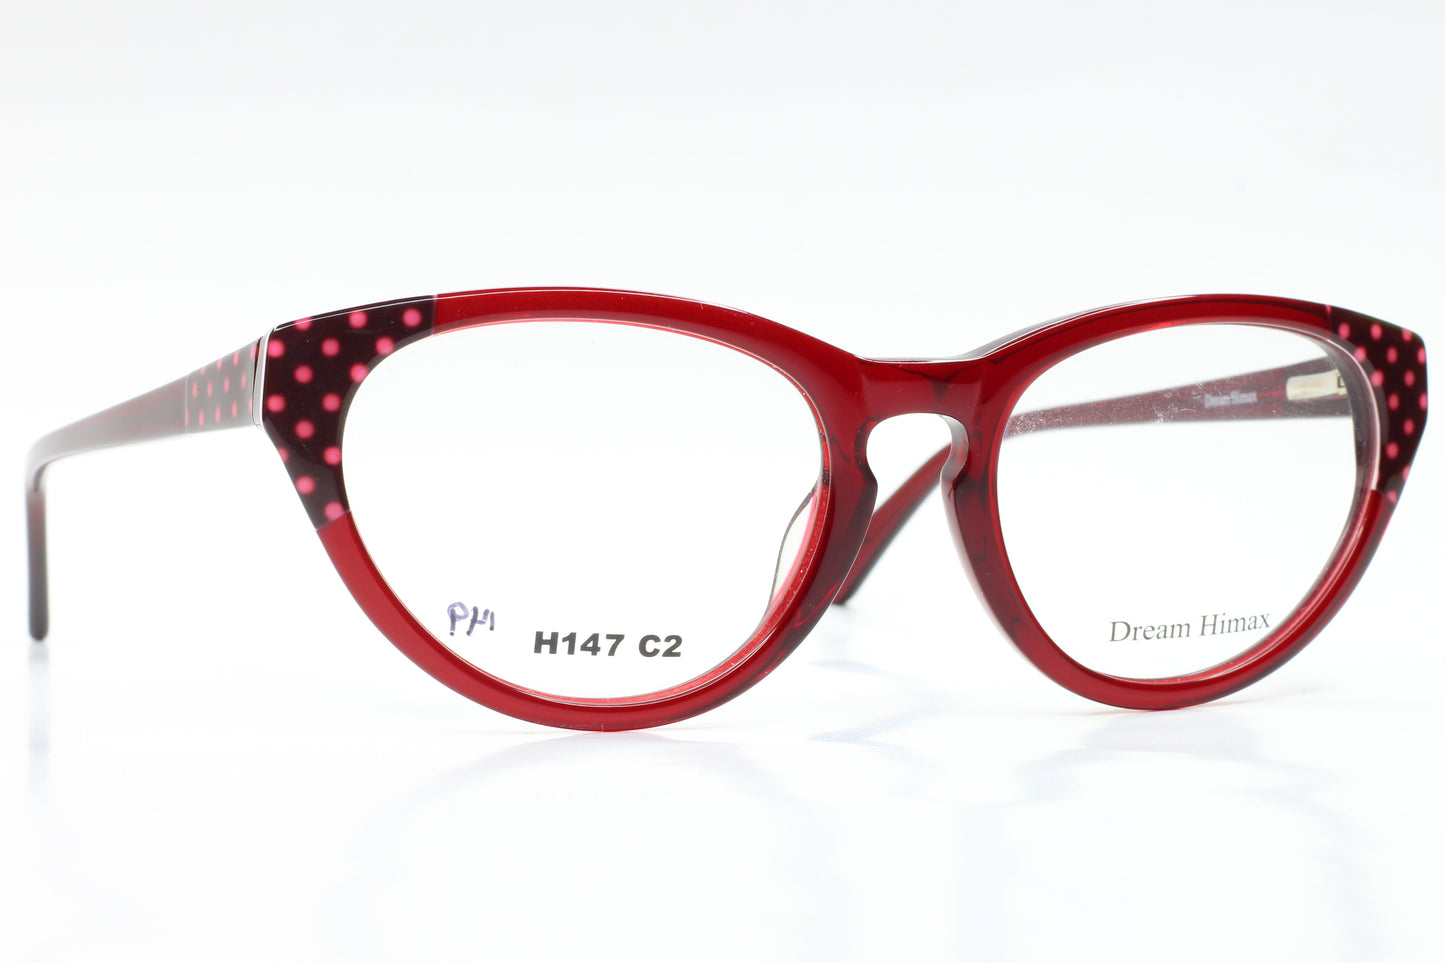 Dream Himax H147 Burgundy Pink Designer Eyeglasses -Wo